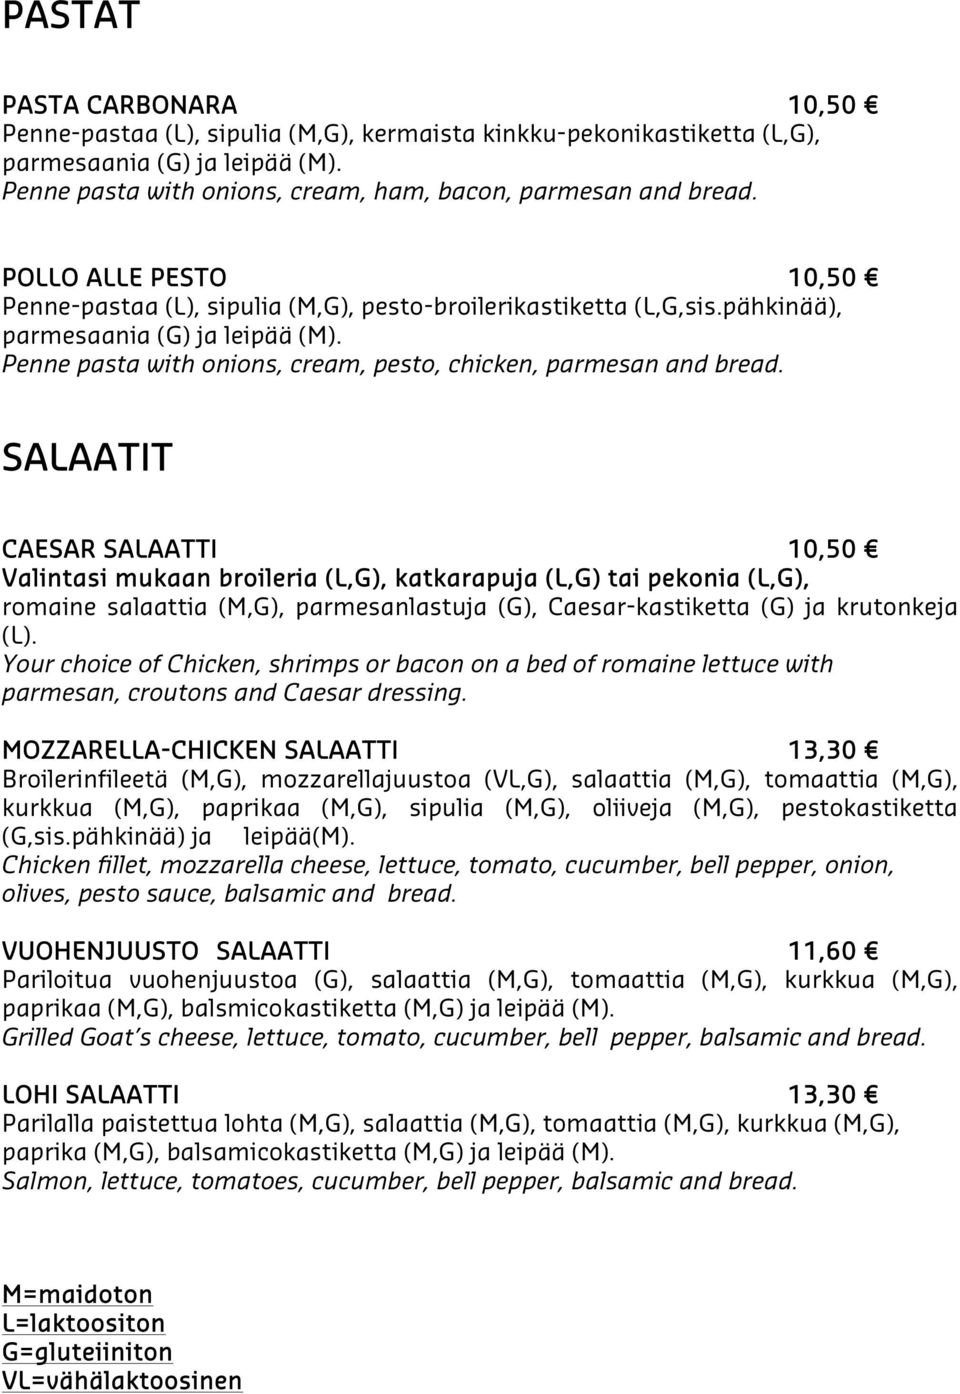 SALAATIT CAESAR SALAATTI 10,50 Valintasi mukaan broileria (L,G), katkarapuja (L,G) tai pekonia (L,G), romaine salaattia (M,G), parmesanlastuja (G), Caesar-kastiketta (G) ja krutonkeja (L).